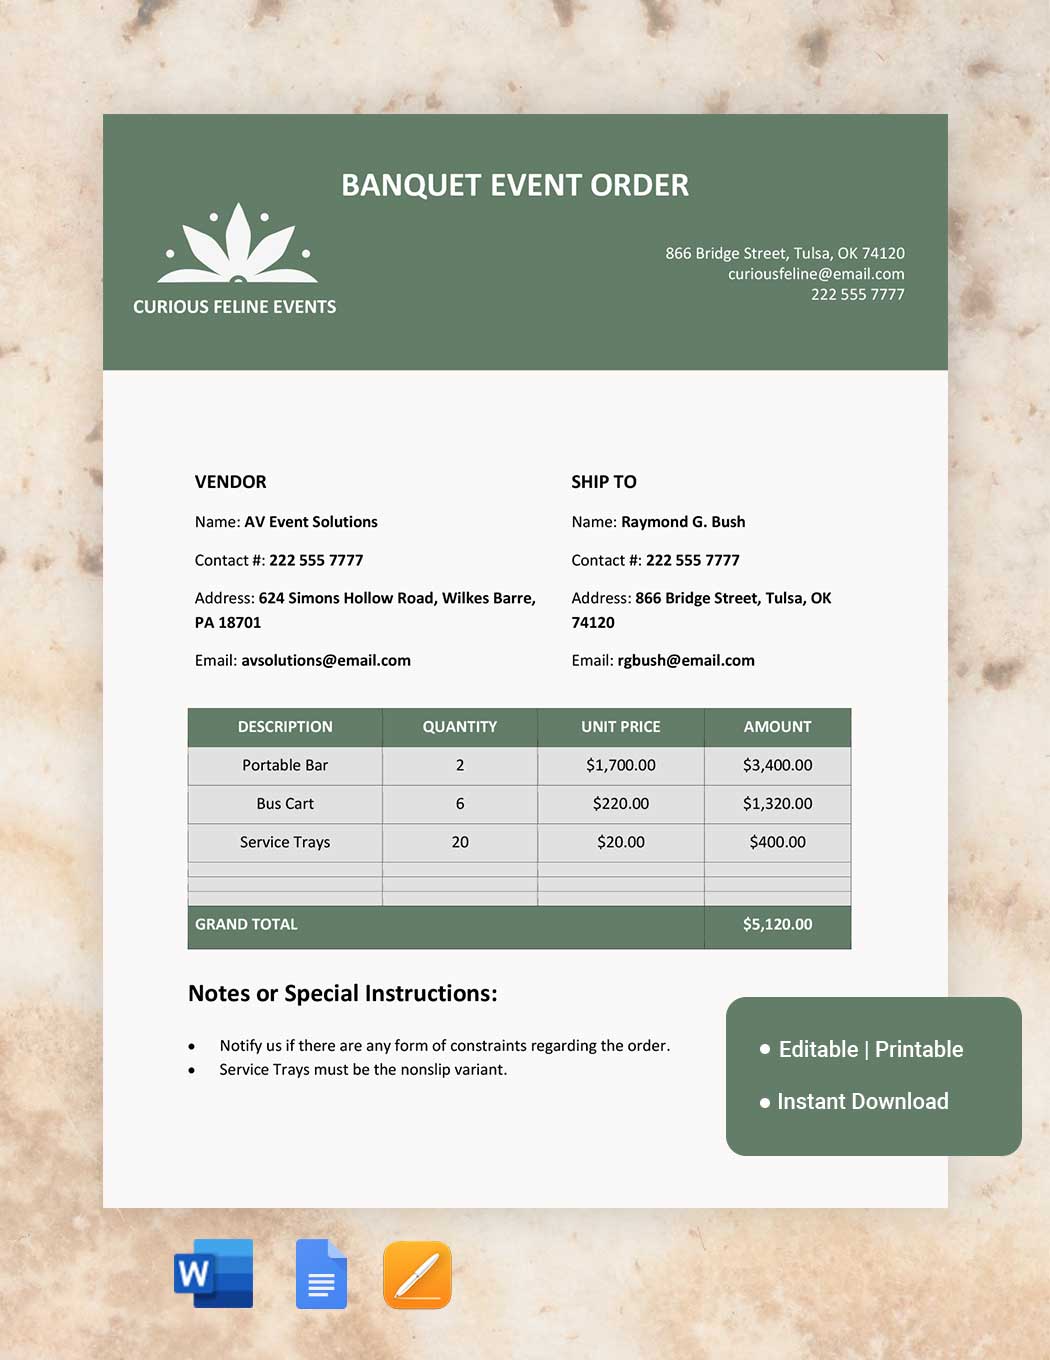 Banquet Event Order Template